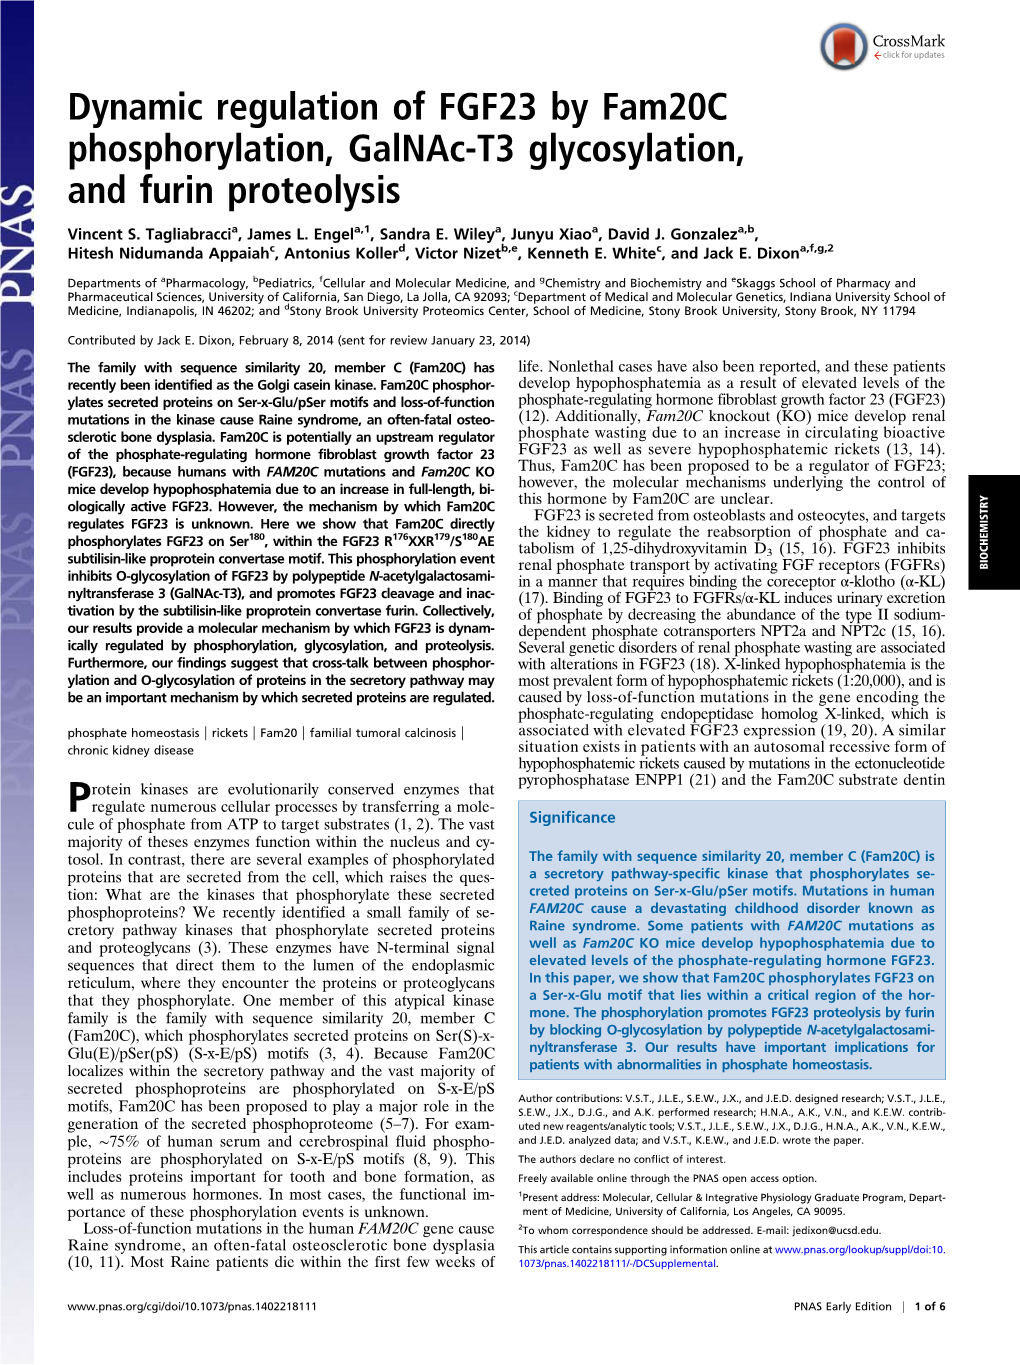 Dynamic Regulation of FGF23 by Fam20c Phosphorylation, Galnac-T3 Glycosylation, and Furin Proteolysis